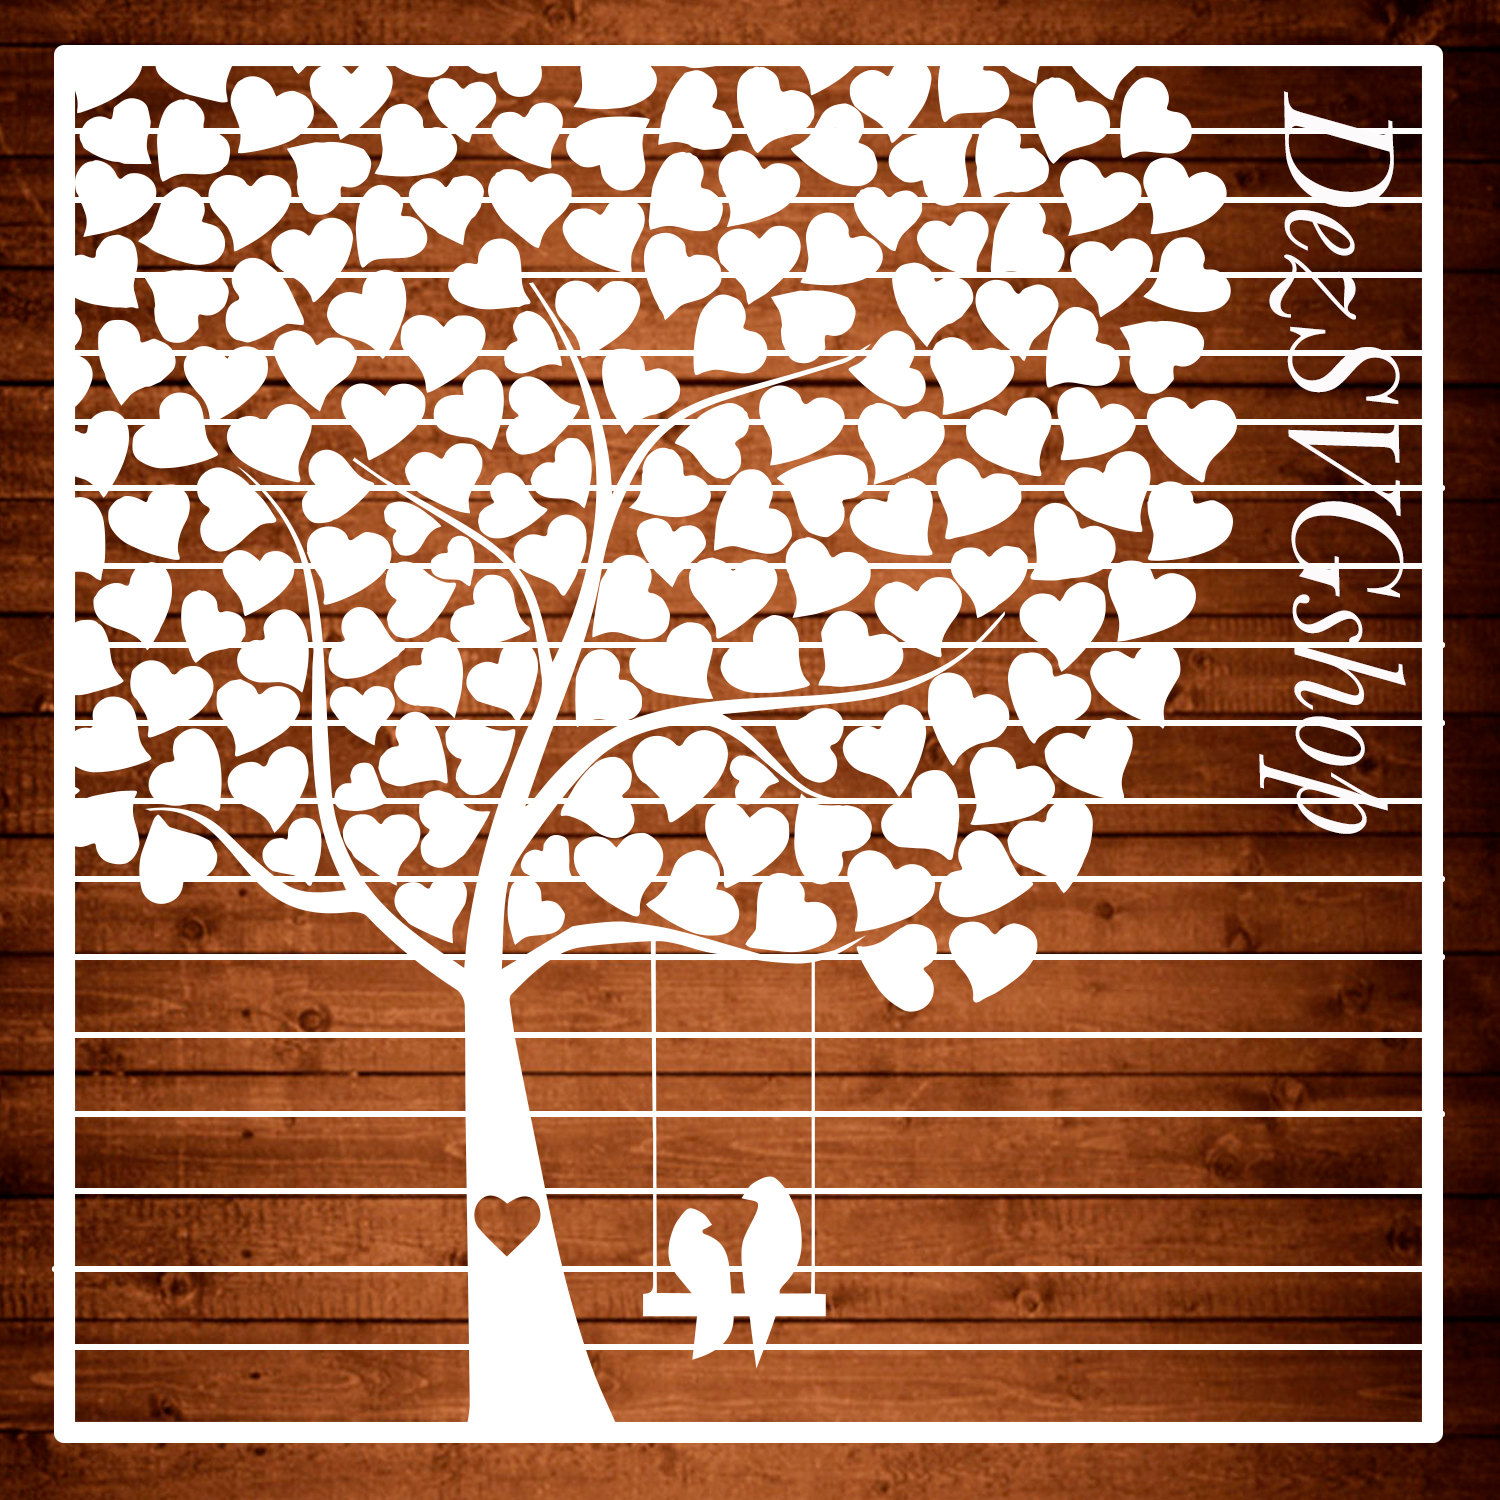 Download Wedding Tree Guest Book Love Birds Swing Hearts by DezSVGShop